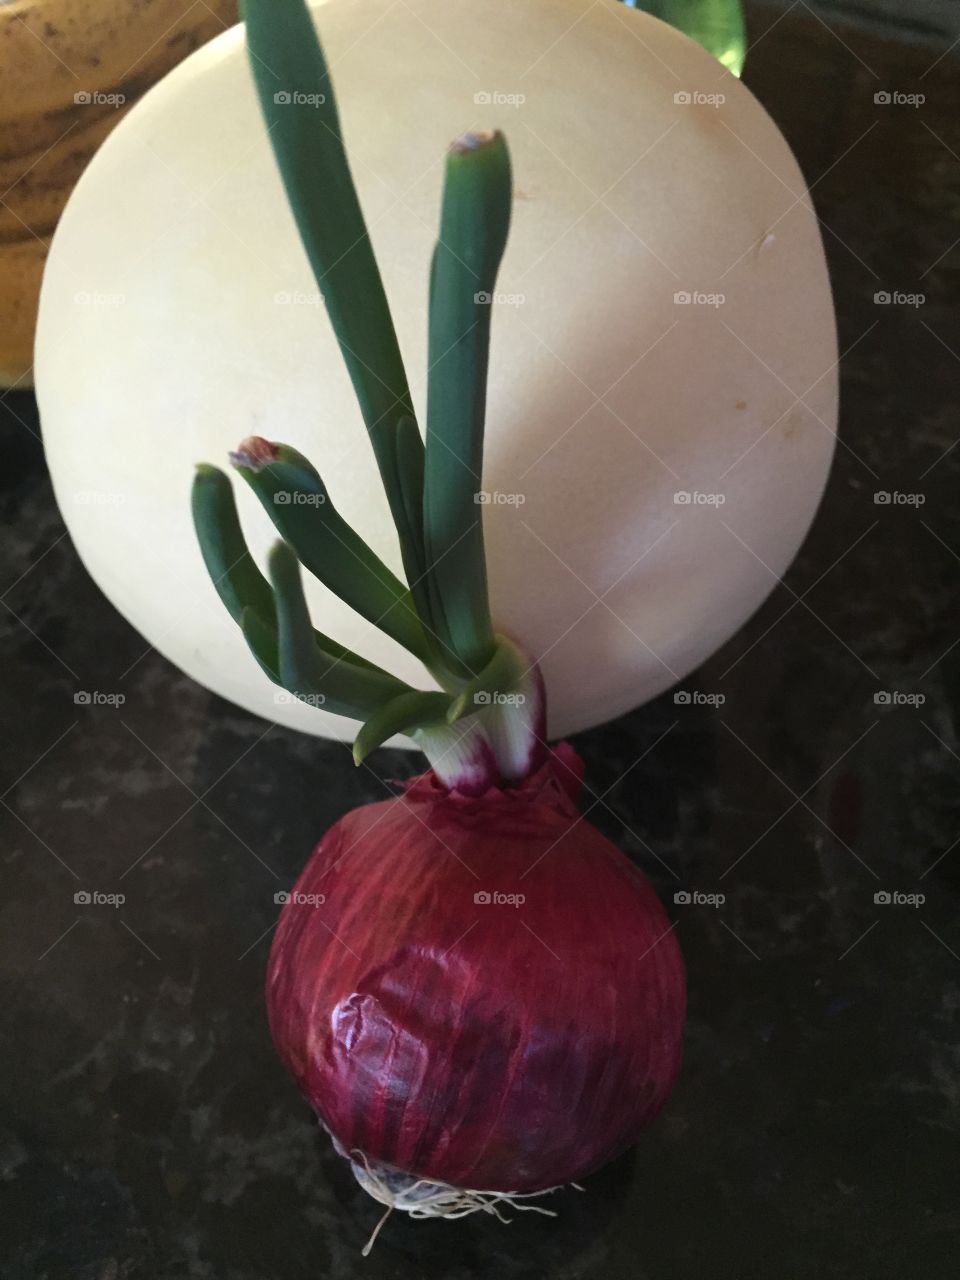 Onion with attitude 